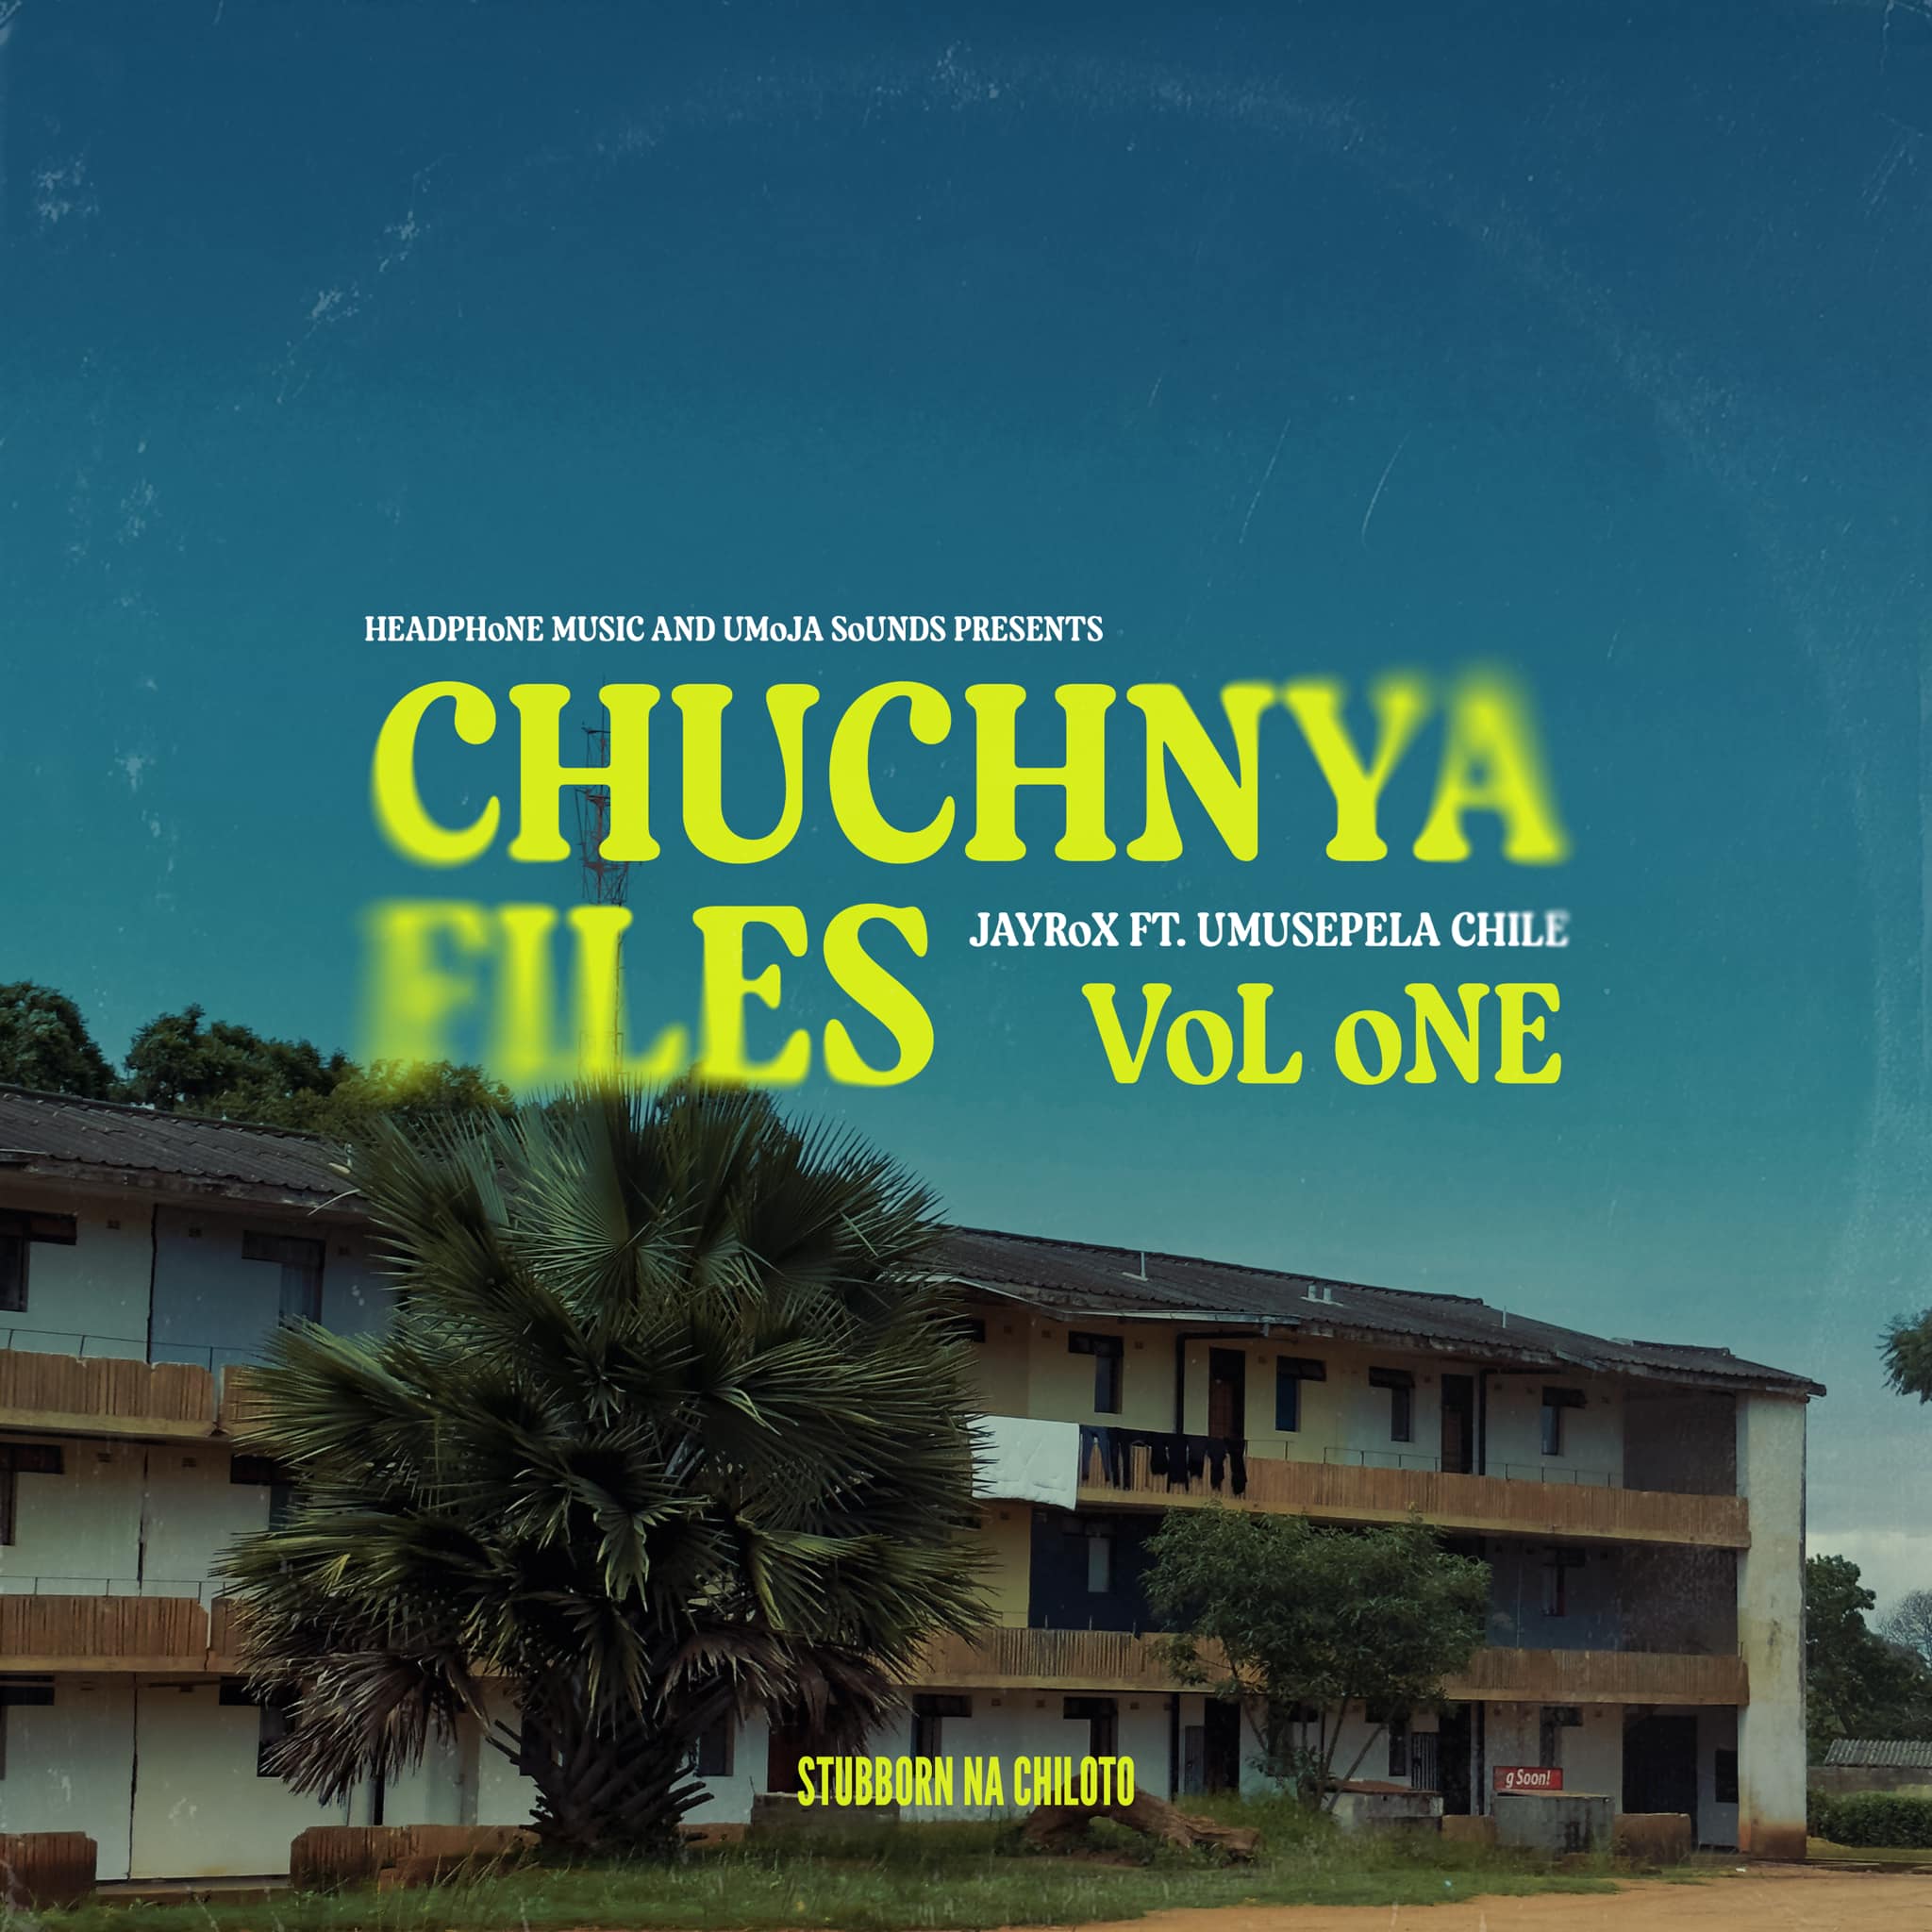 Jay Rox Ft. Umusepela Chile - Chuchnya Files Vol.1 EP